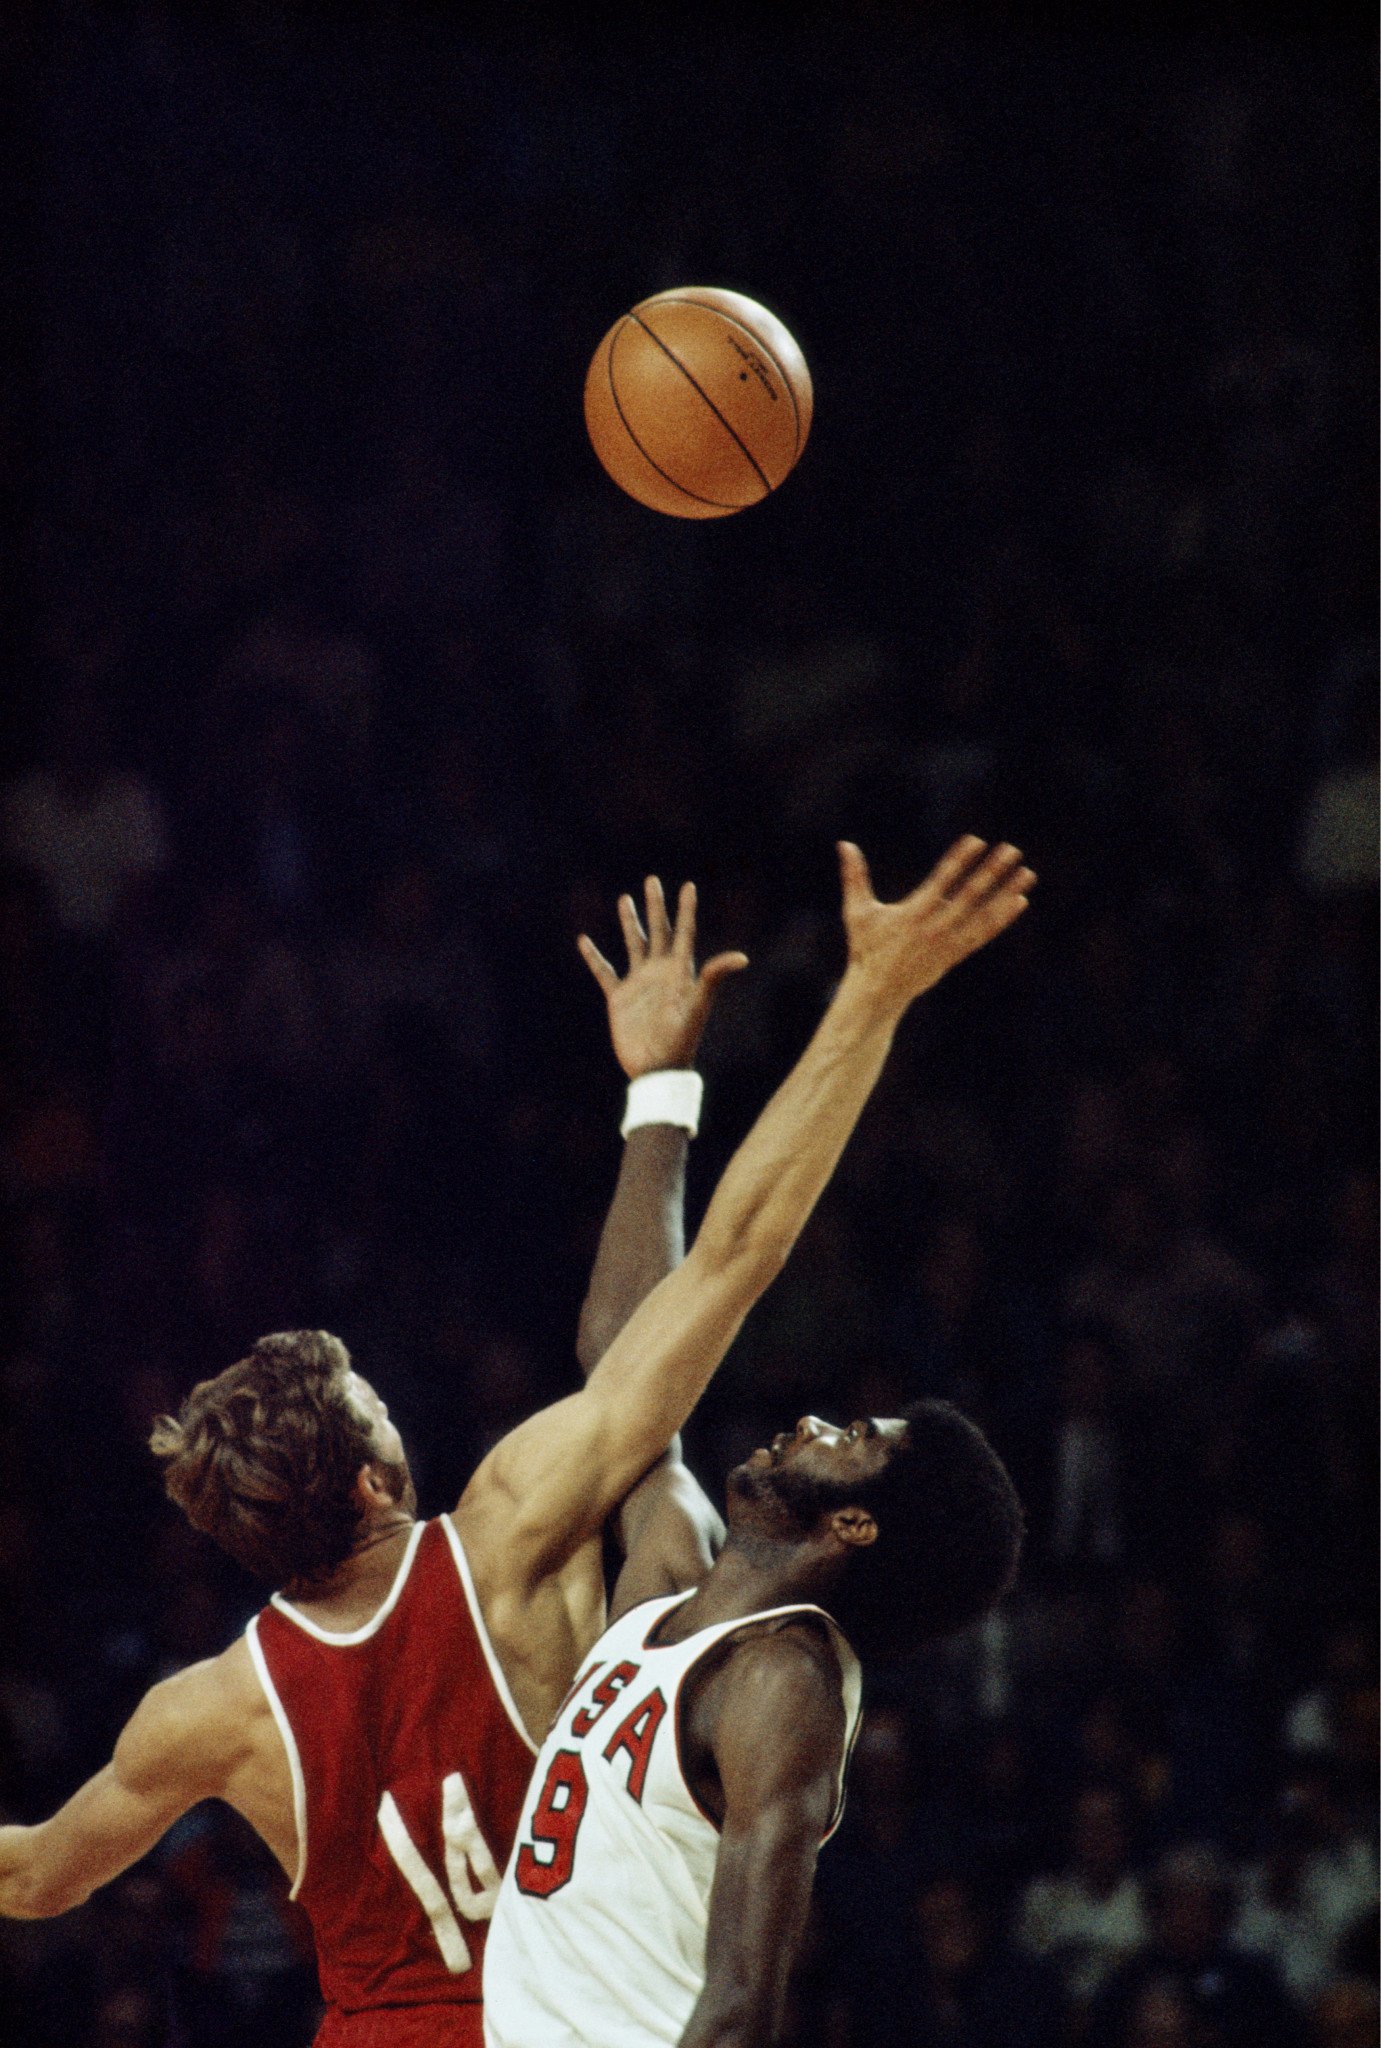 Игры 1972 баскетбол. 1972 Олимпийские игры баскетбол США СССР. Матч баскетбол 1972 СССР США.